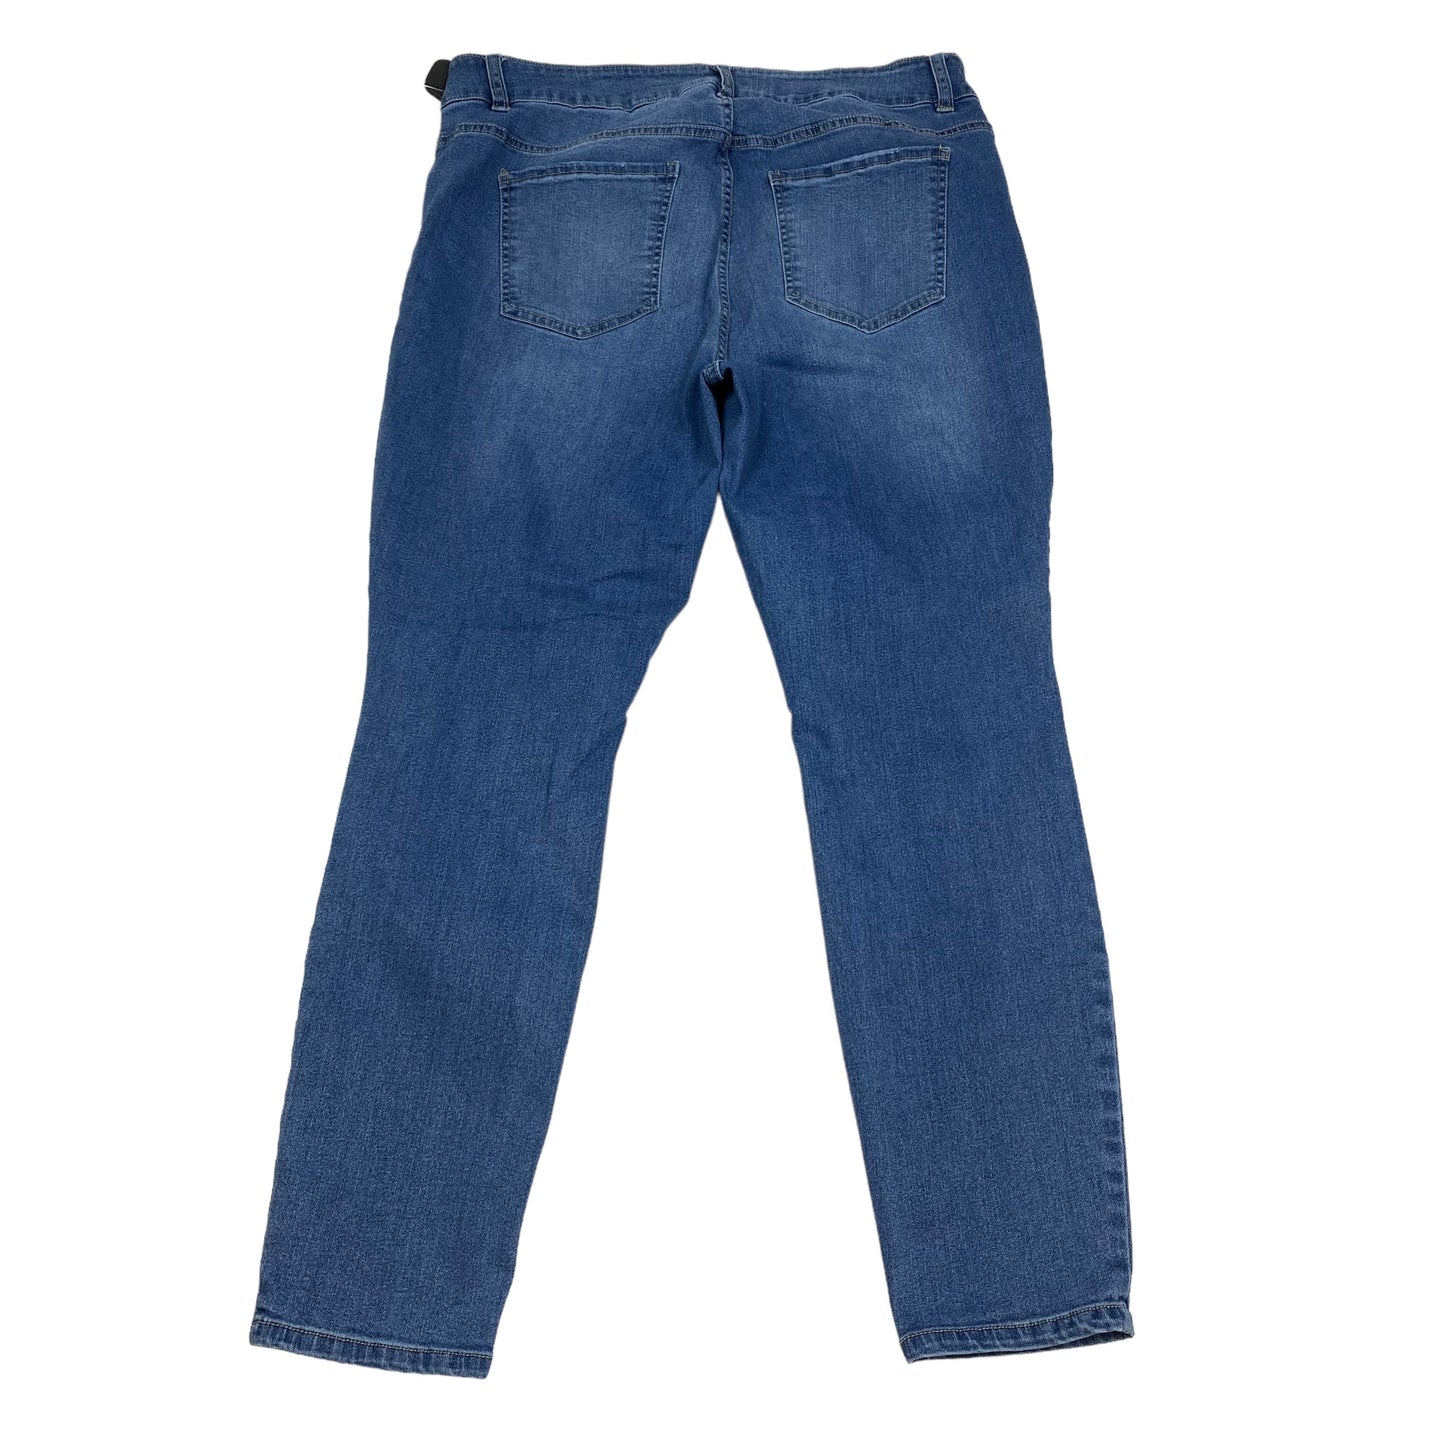 Blue Denim Jeans Skinny D Jeans, Size 18w